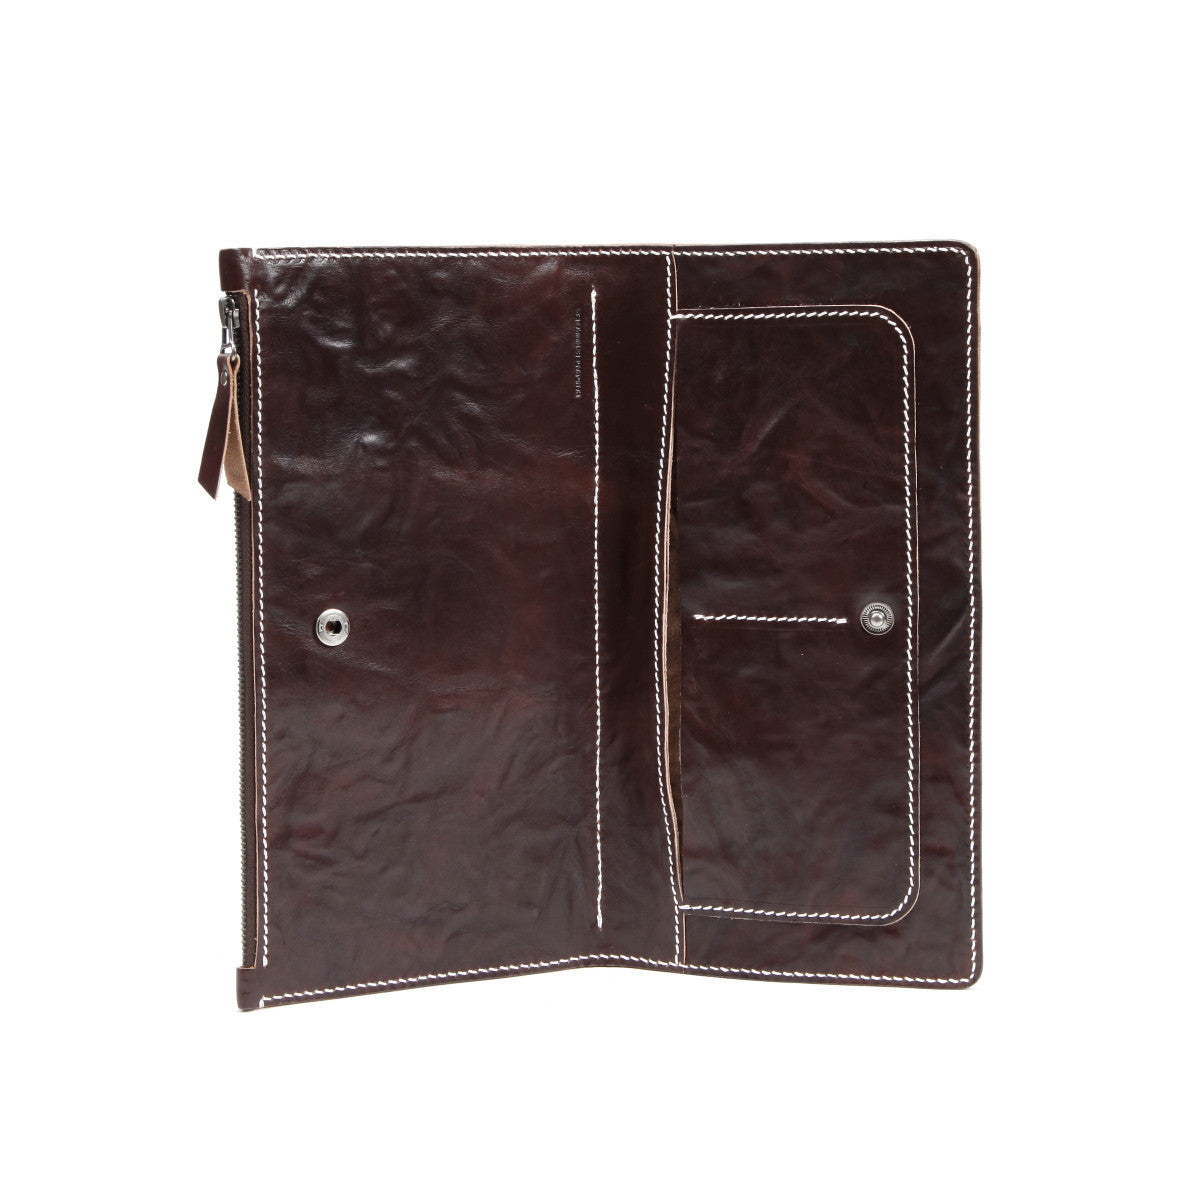 Handmade Leather Foldover Clutch Bag